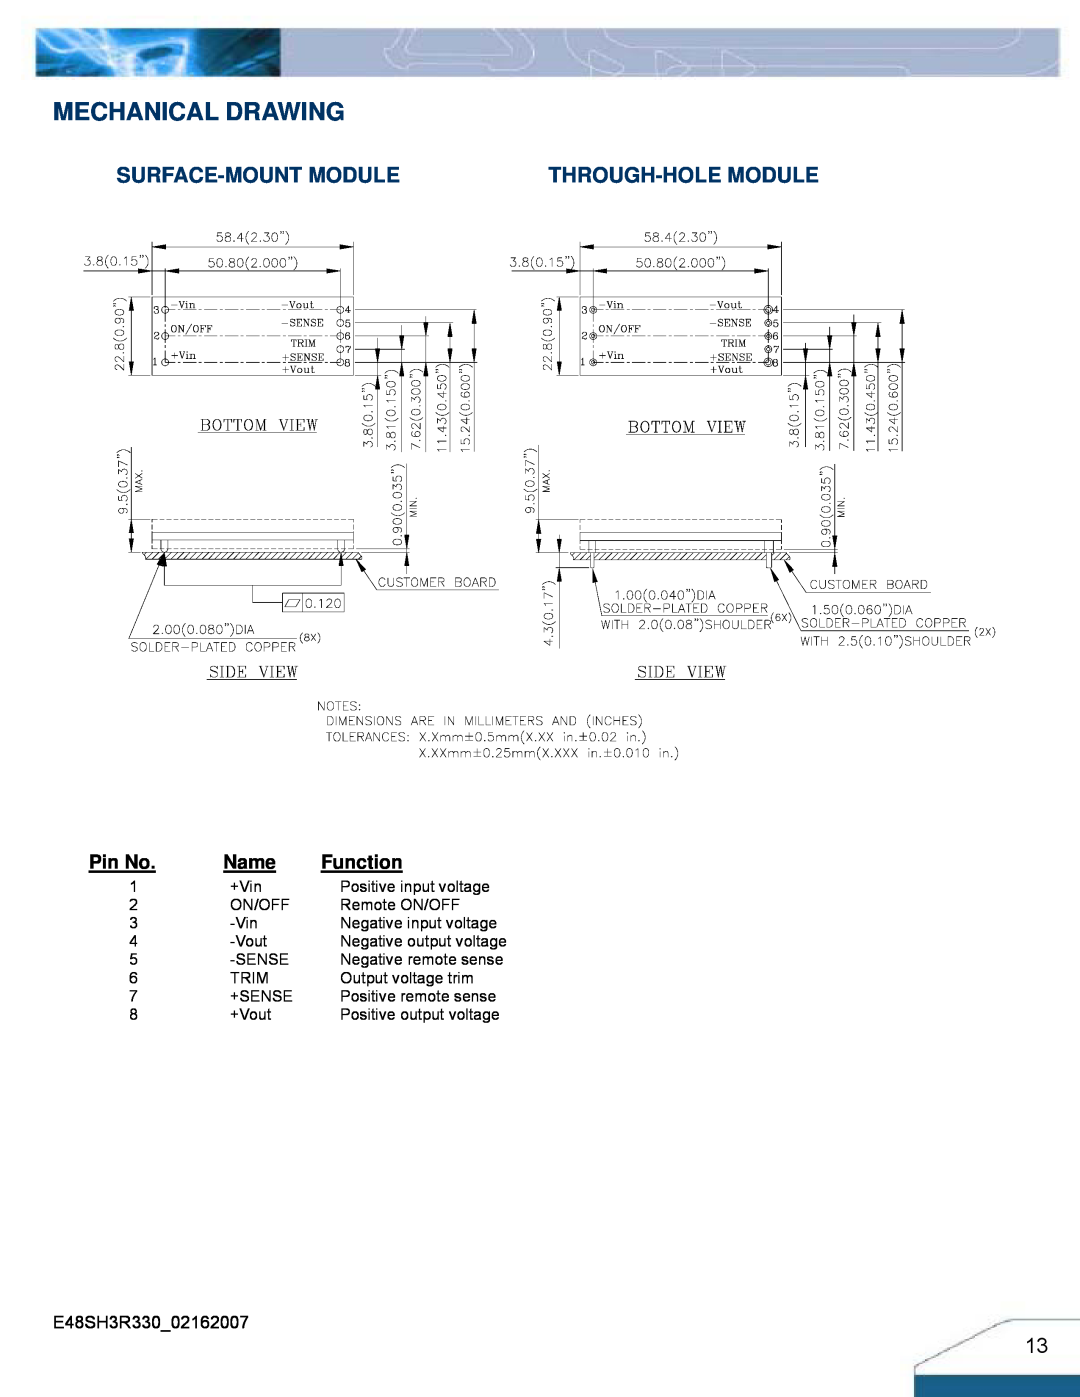 Delta Electronics Series E48SH manual Mechanical Drawing, Surface-Mount Module, Through-Hole Module, Pin No, Name, Function 